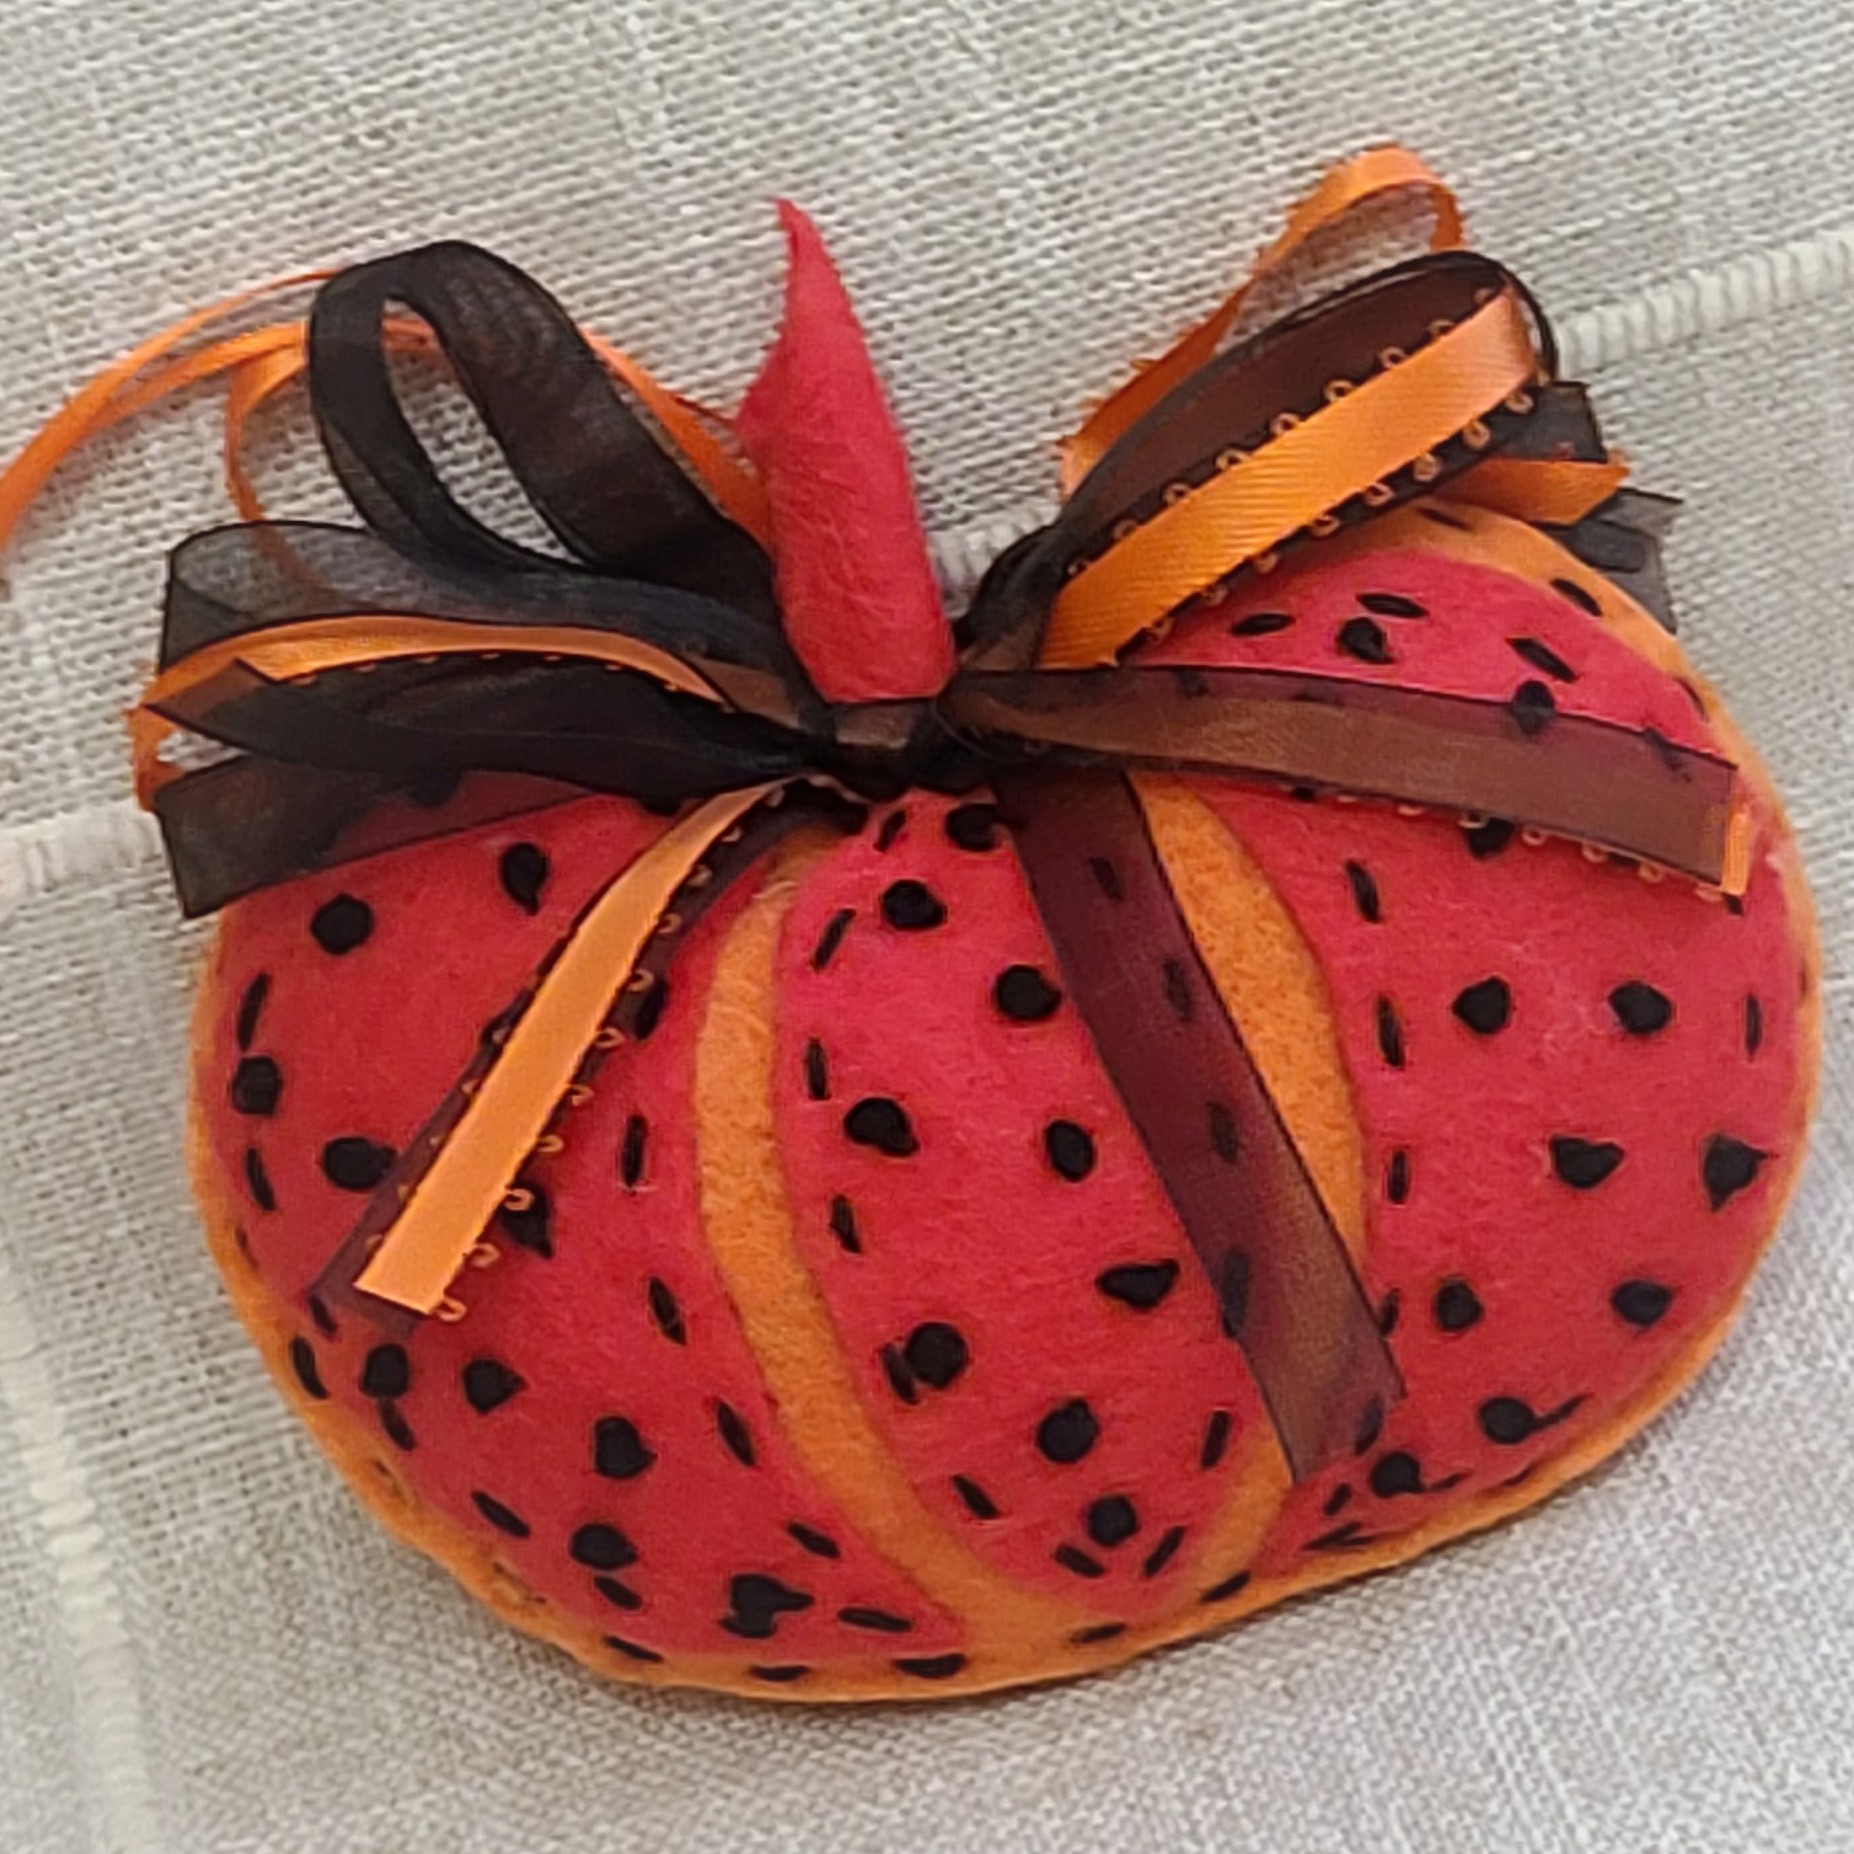 Felt pumpkin ornament - polka dot orange and black